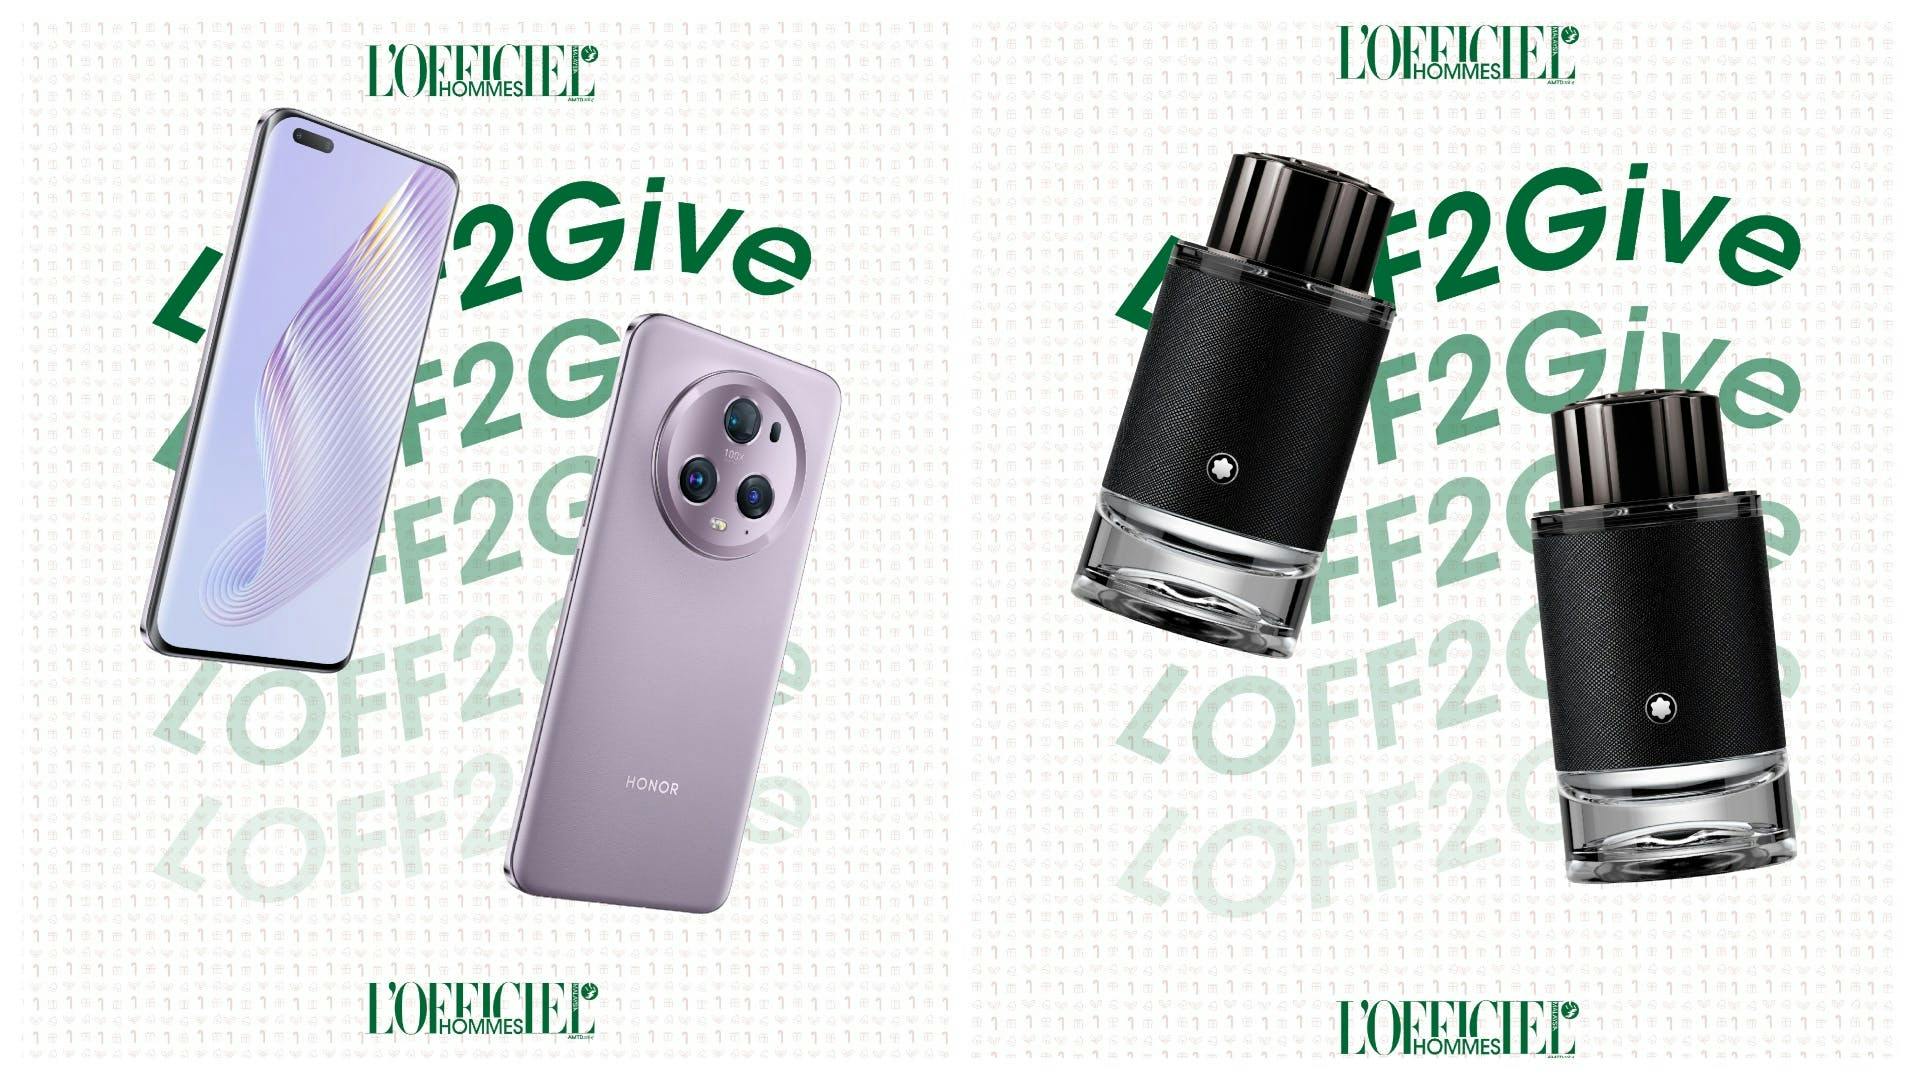 bottle cosmetics perfume electronics mobile phone phone